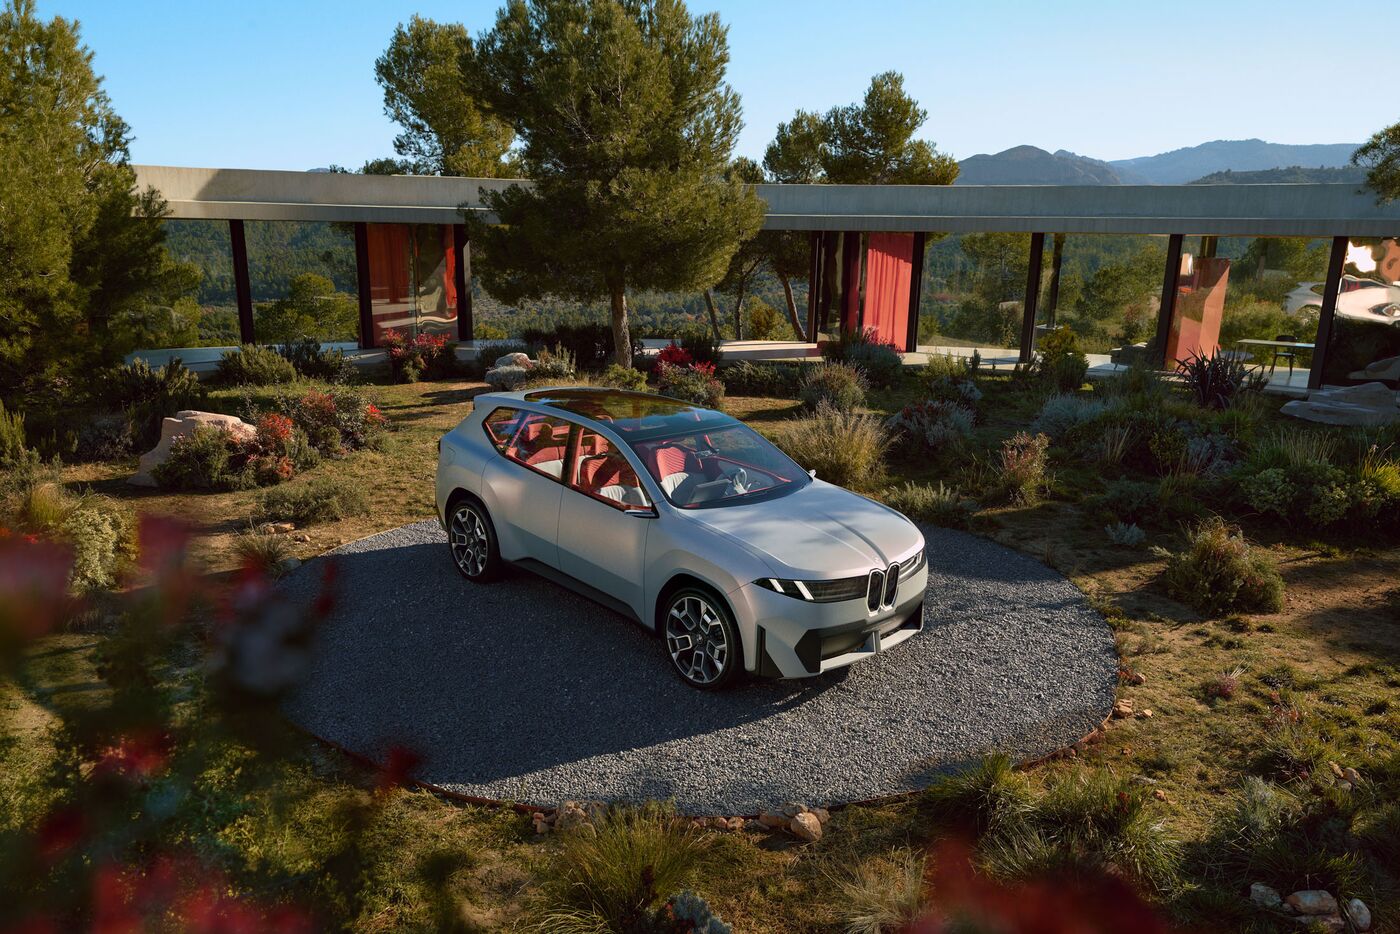 BMW Unveils New Concept Electric SUV to Take On Tesla, MercedesBenz